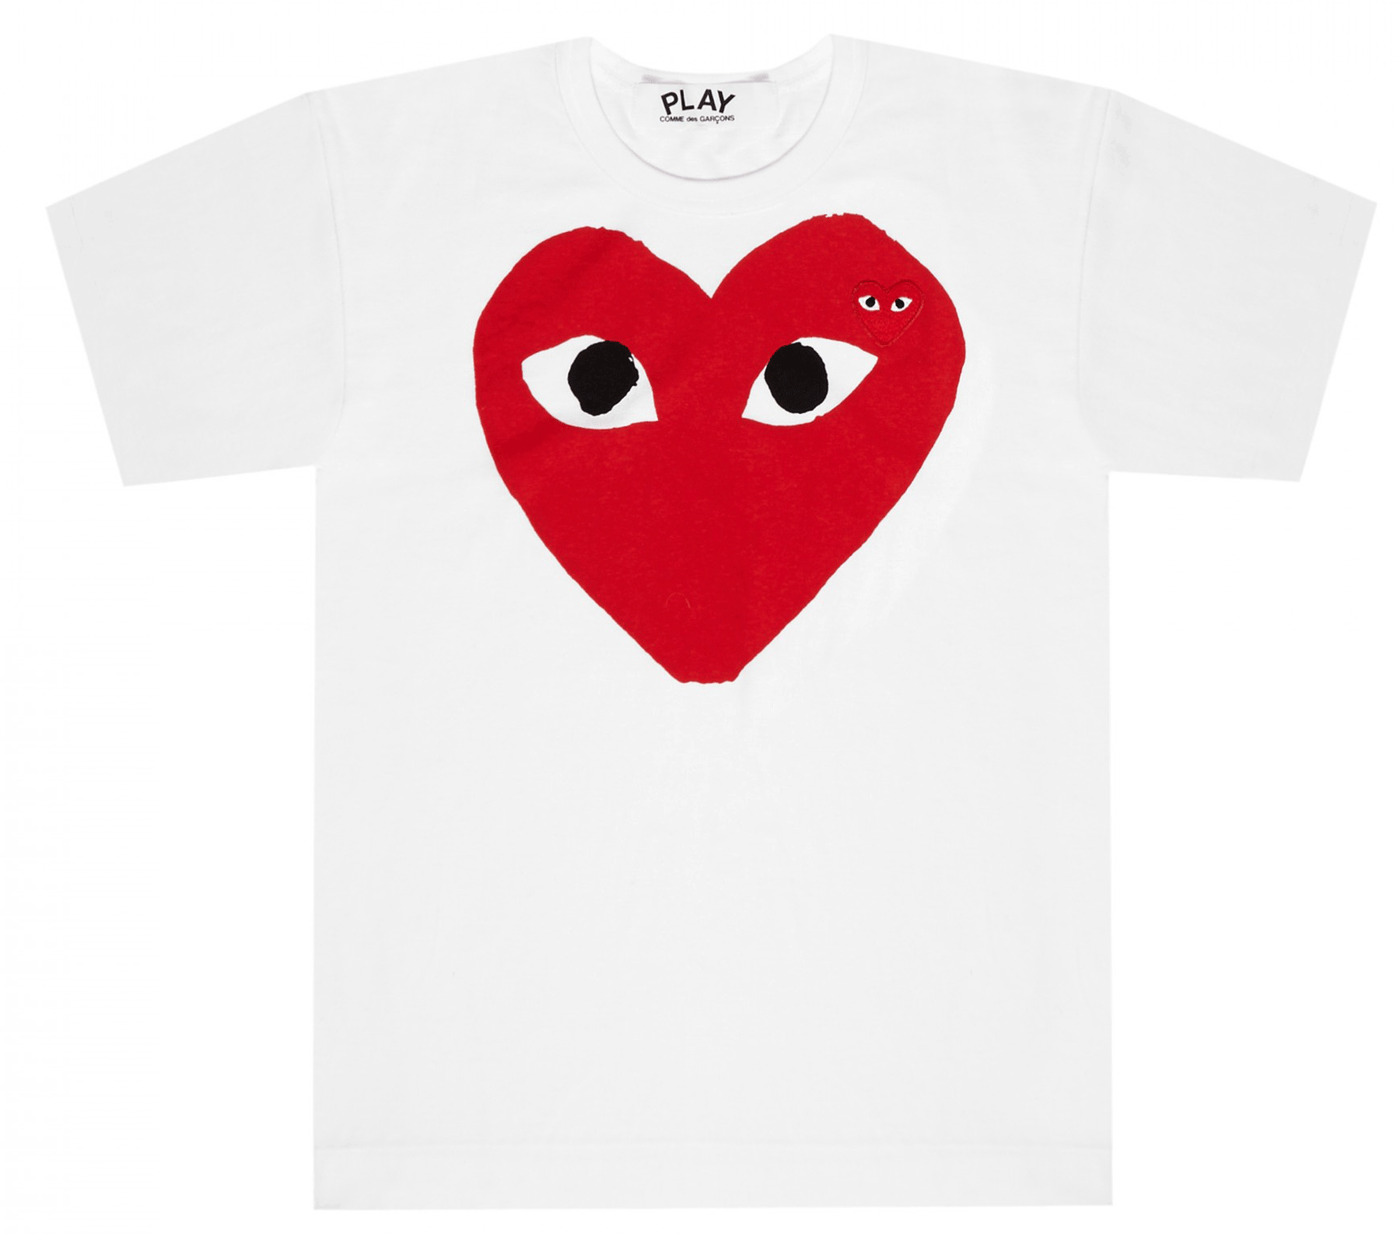 Comme-des-Garcons-Play-Big-Red-Heart-T-Shirt-Men-White-1